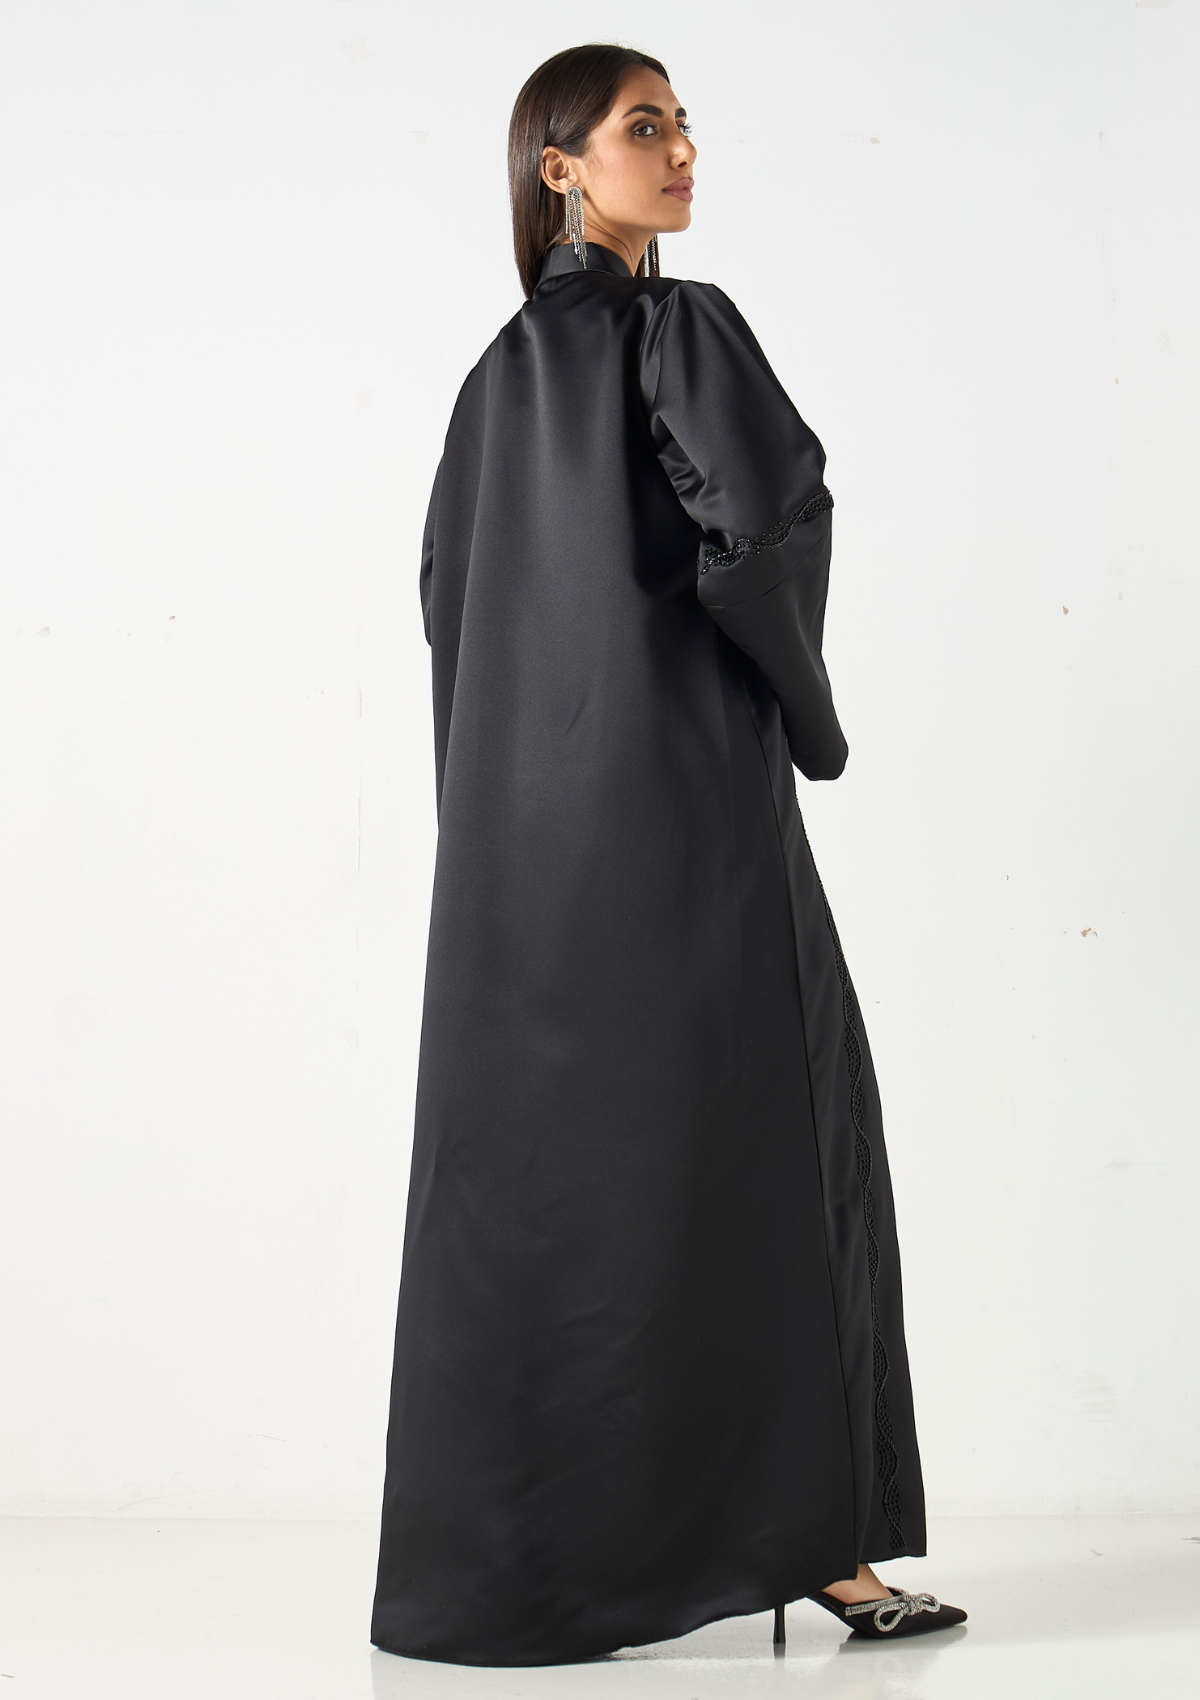 Embellished Abaya with Hijab